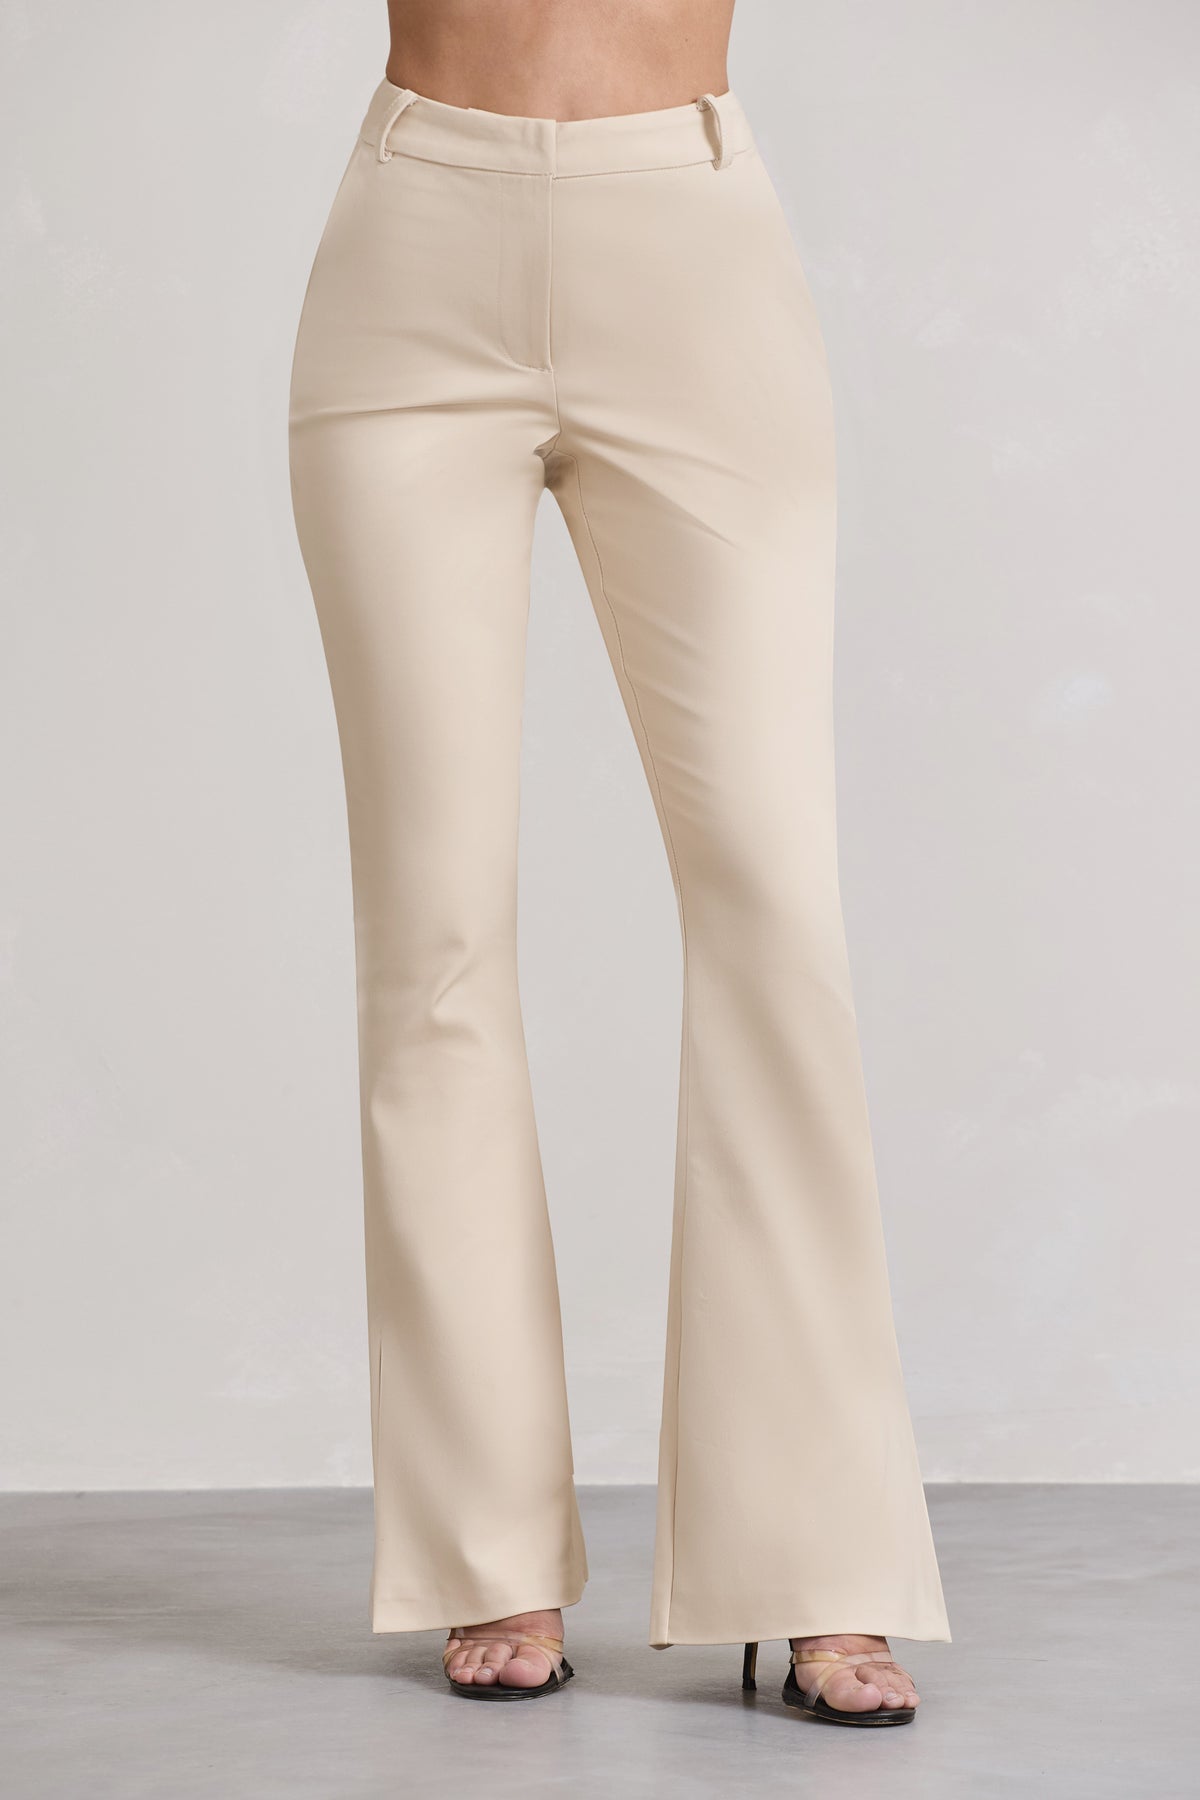 High Waist Trousers - Cream - Ladies | H&M IN